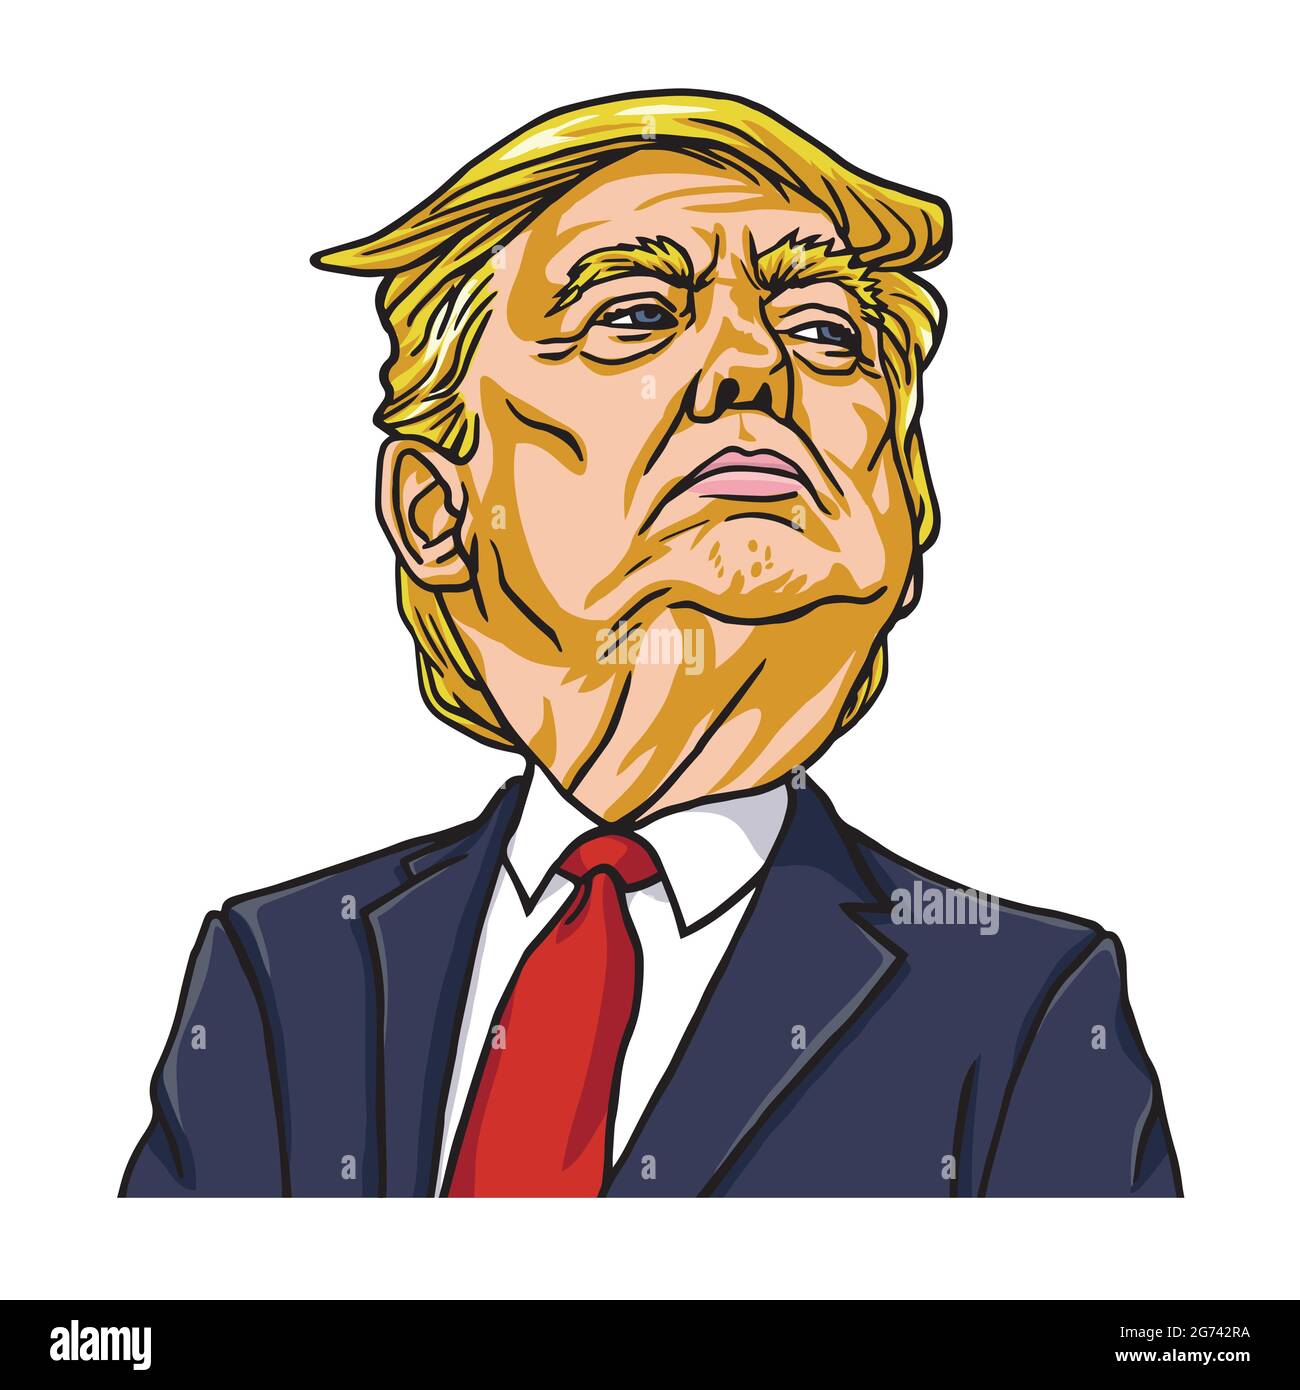 Donald Trump the President of the United States of America. Cartoon Vector. Washington, May 19, 2018 Stock Vector